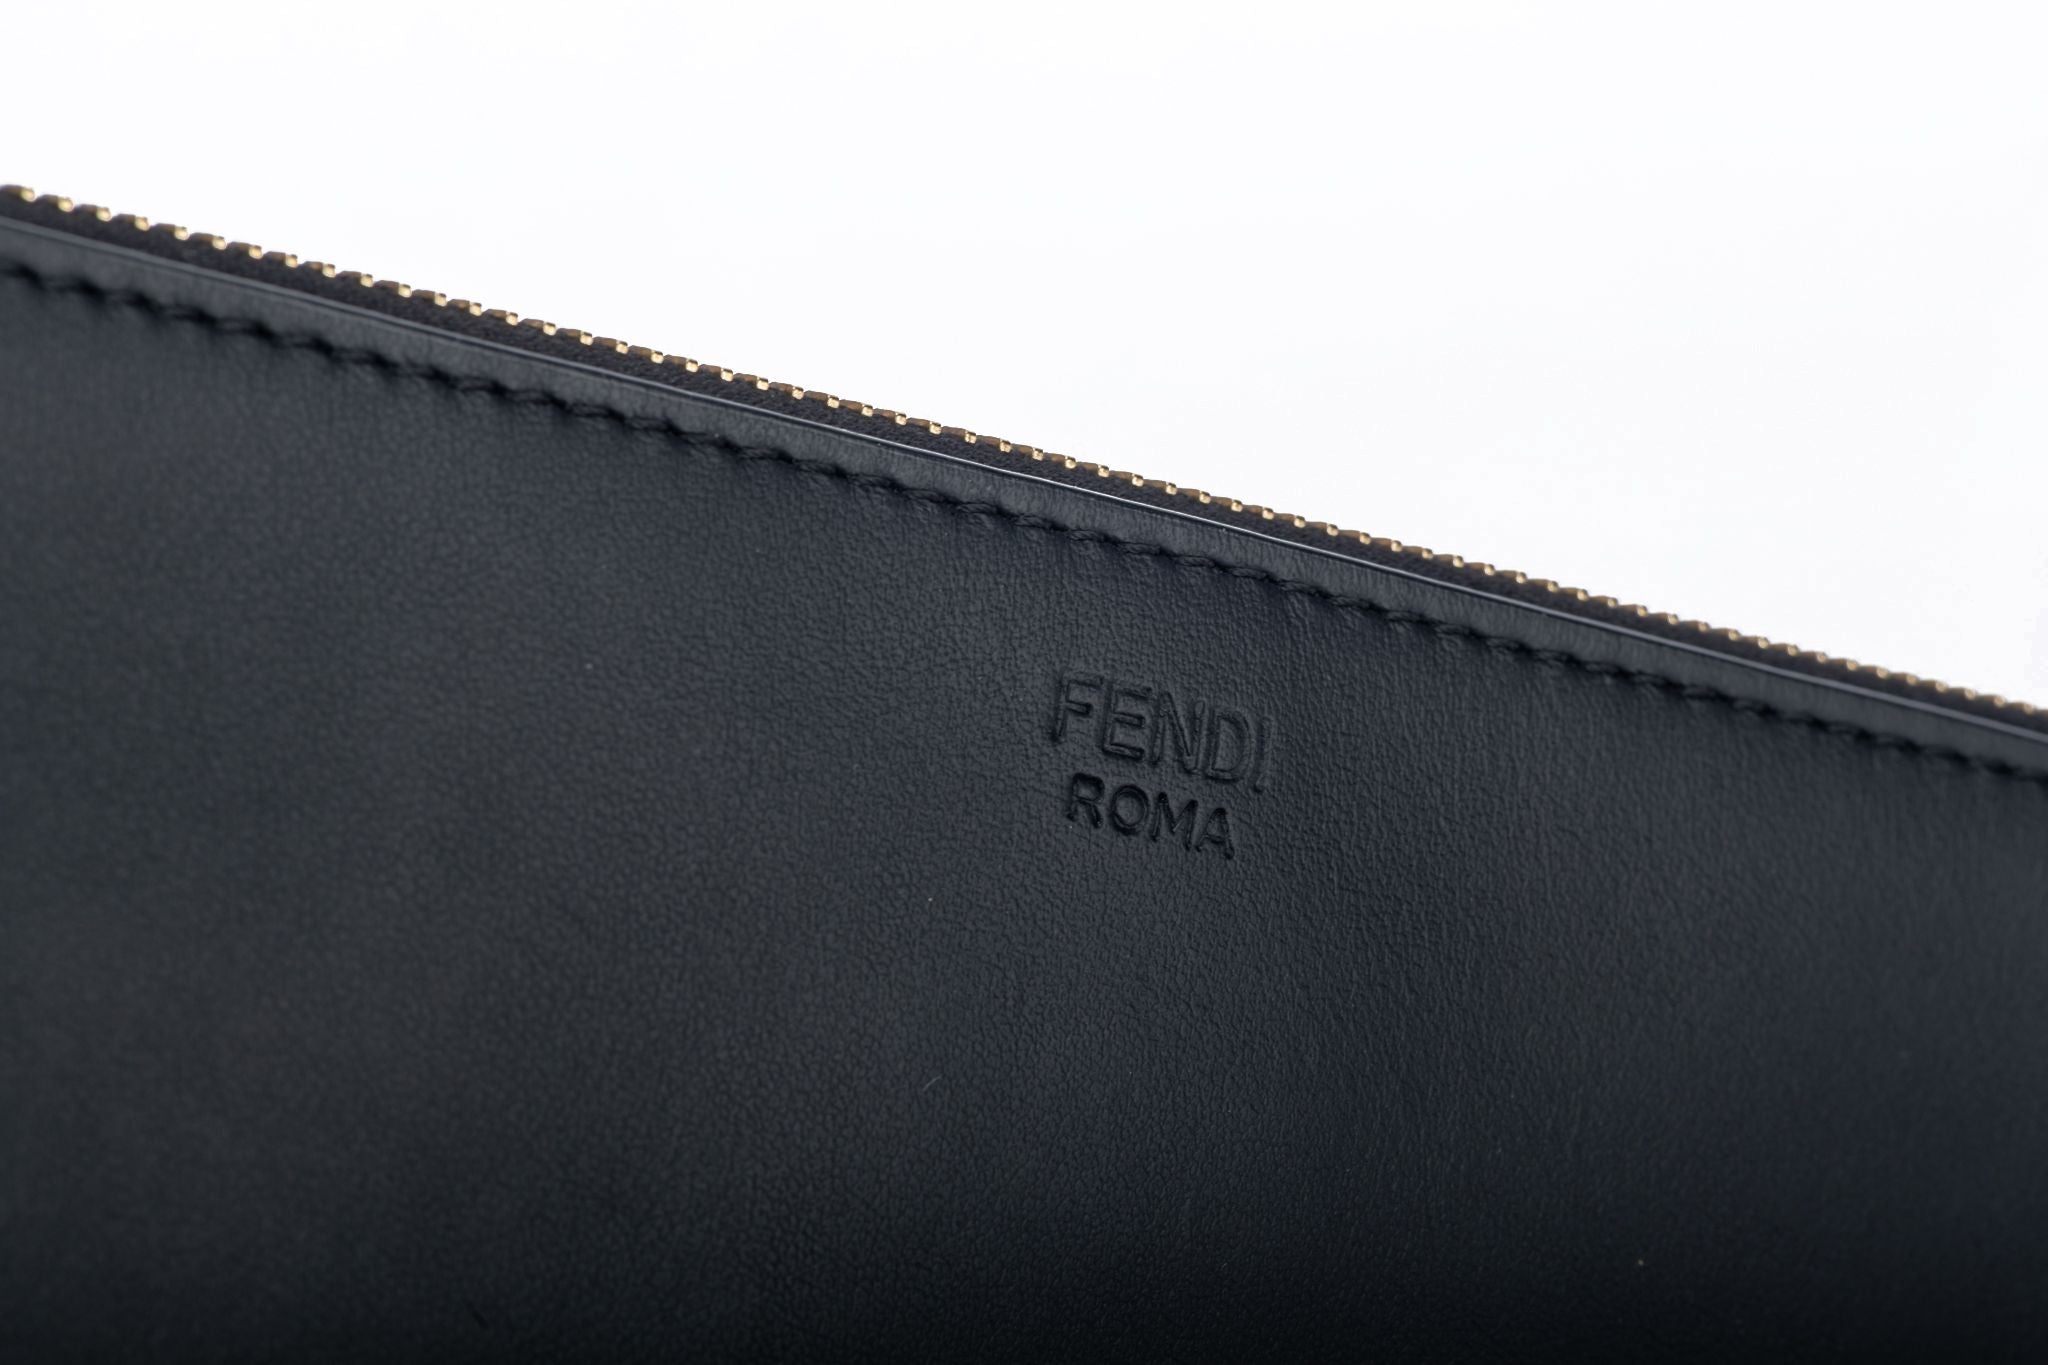 Fendi Black Leather and Metal Bag Bugs Eyes Clutch Fendi